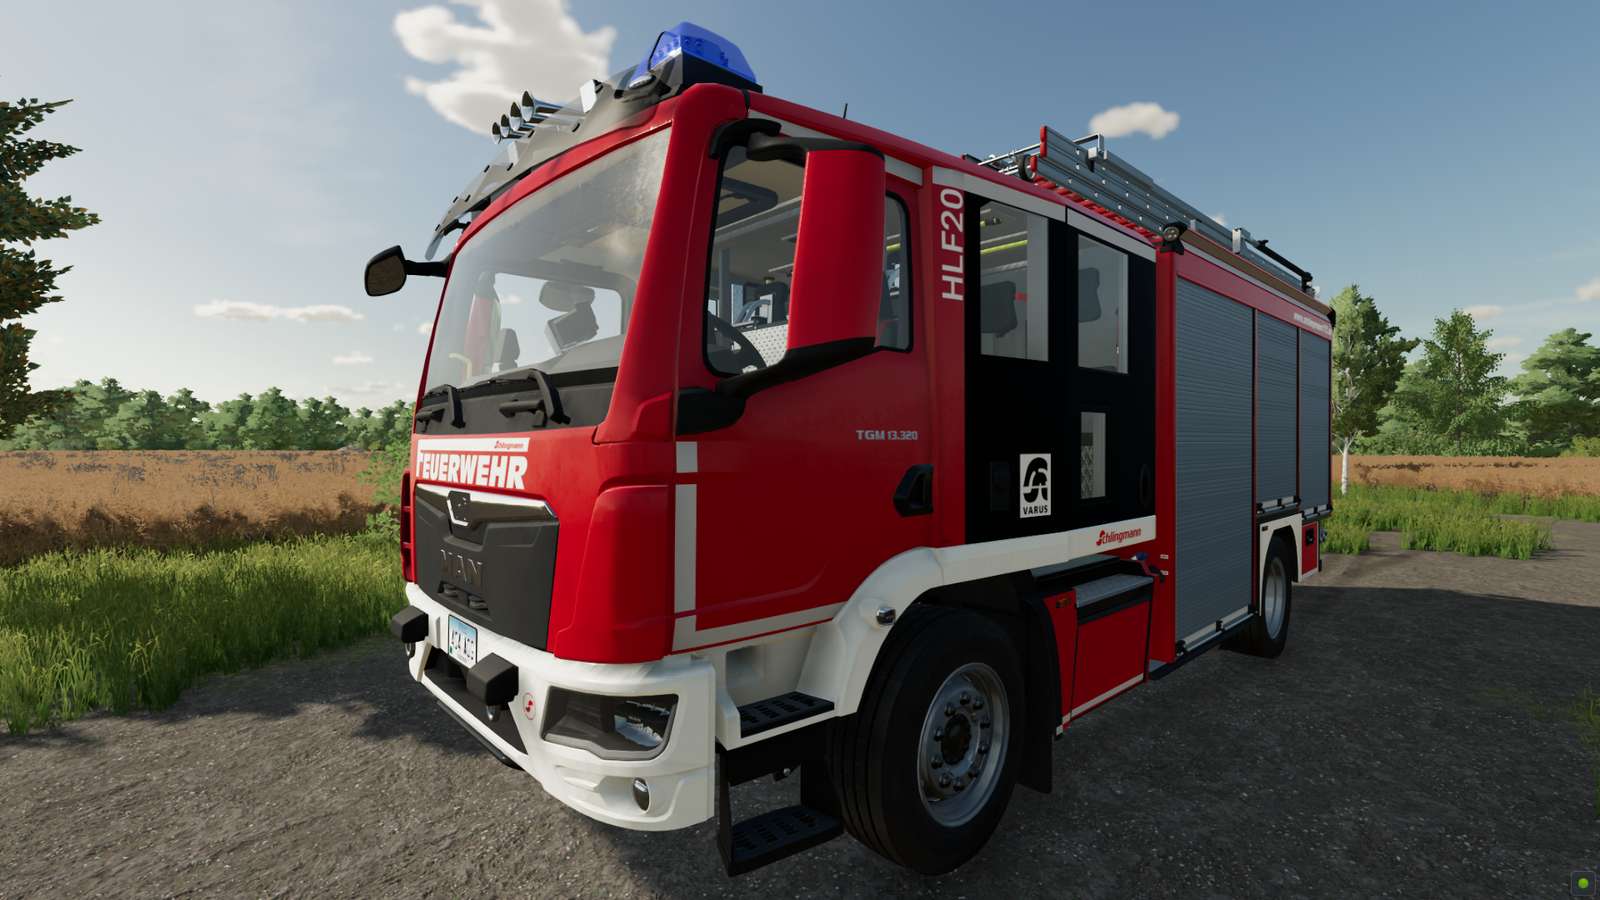 FS22消防署 オンラインパズル